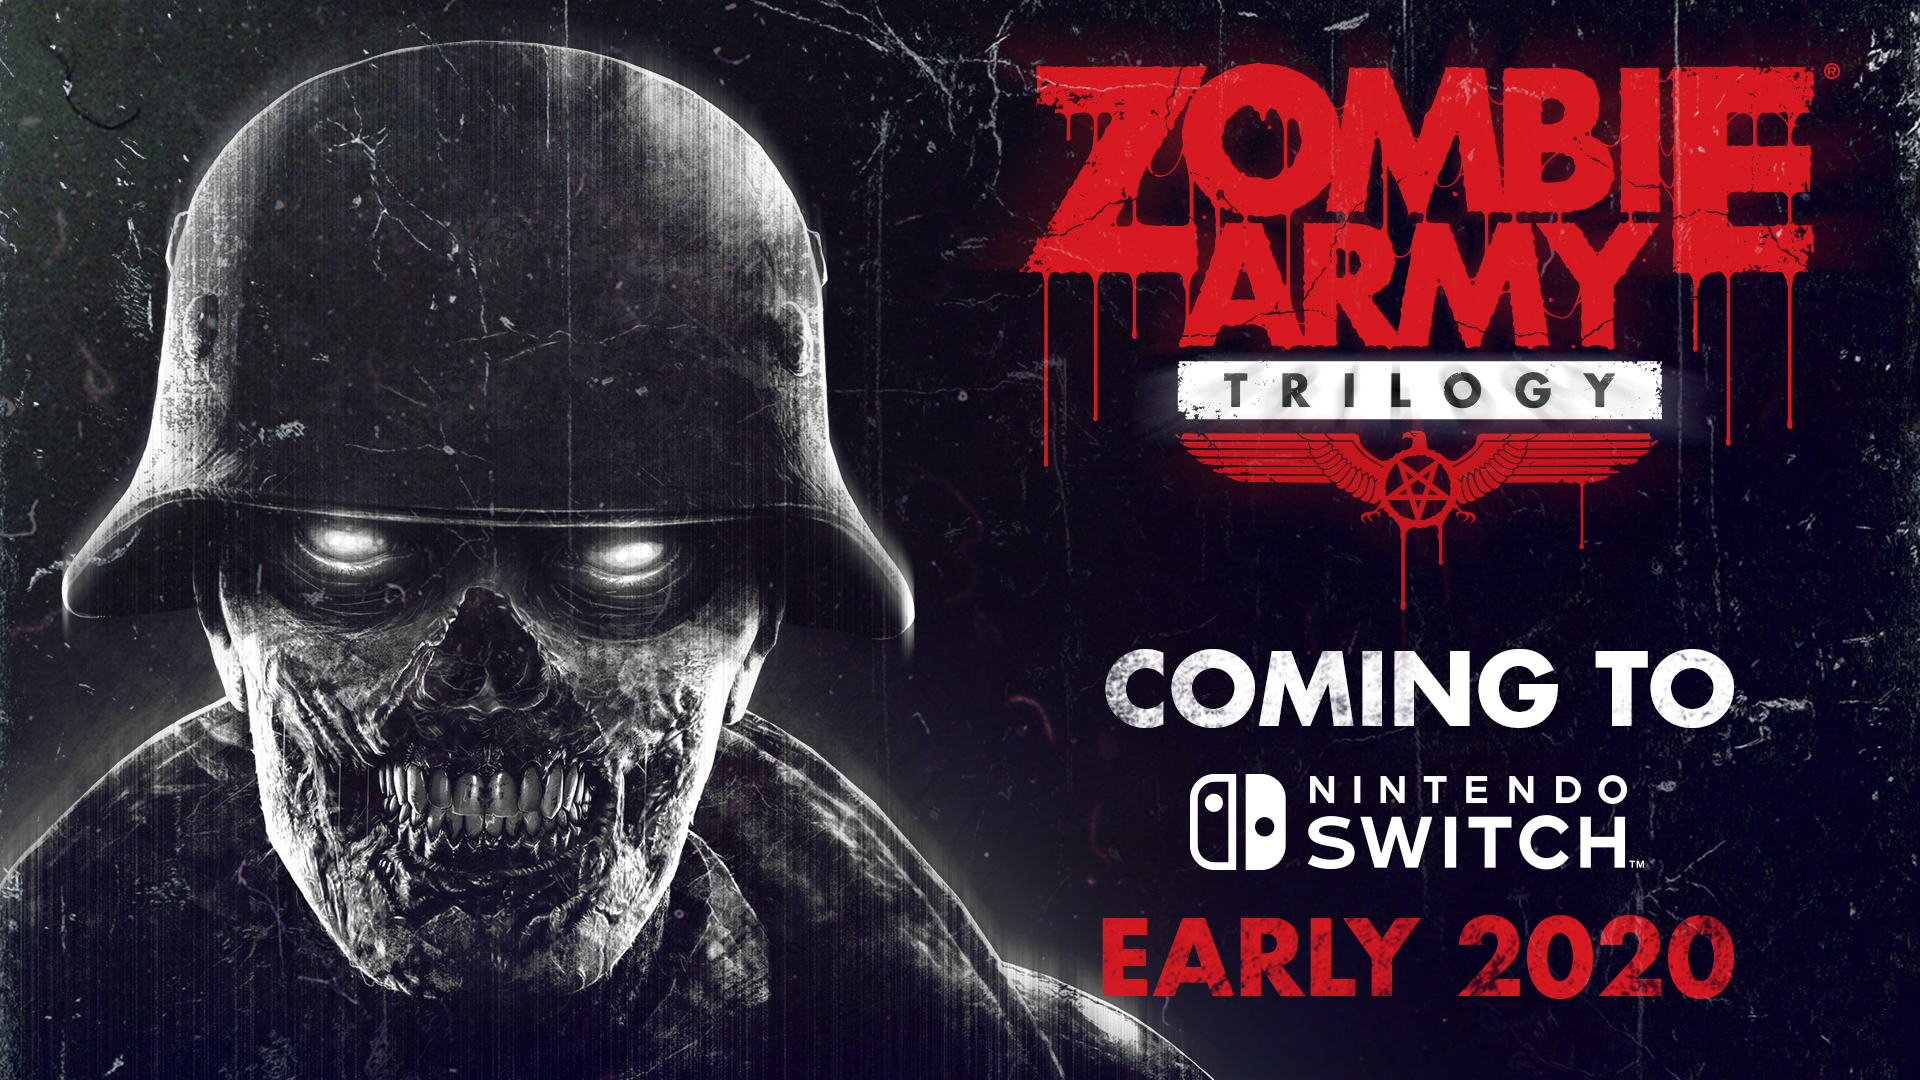 Zombie Army 4: Dead War Army Trilogy is